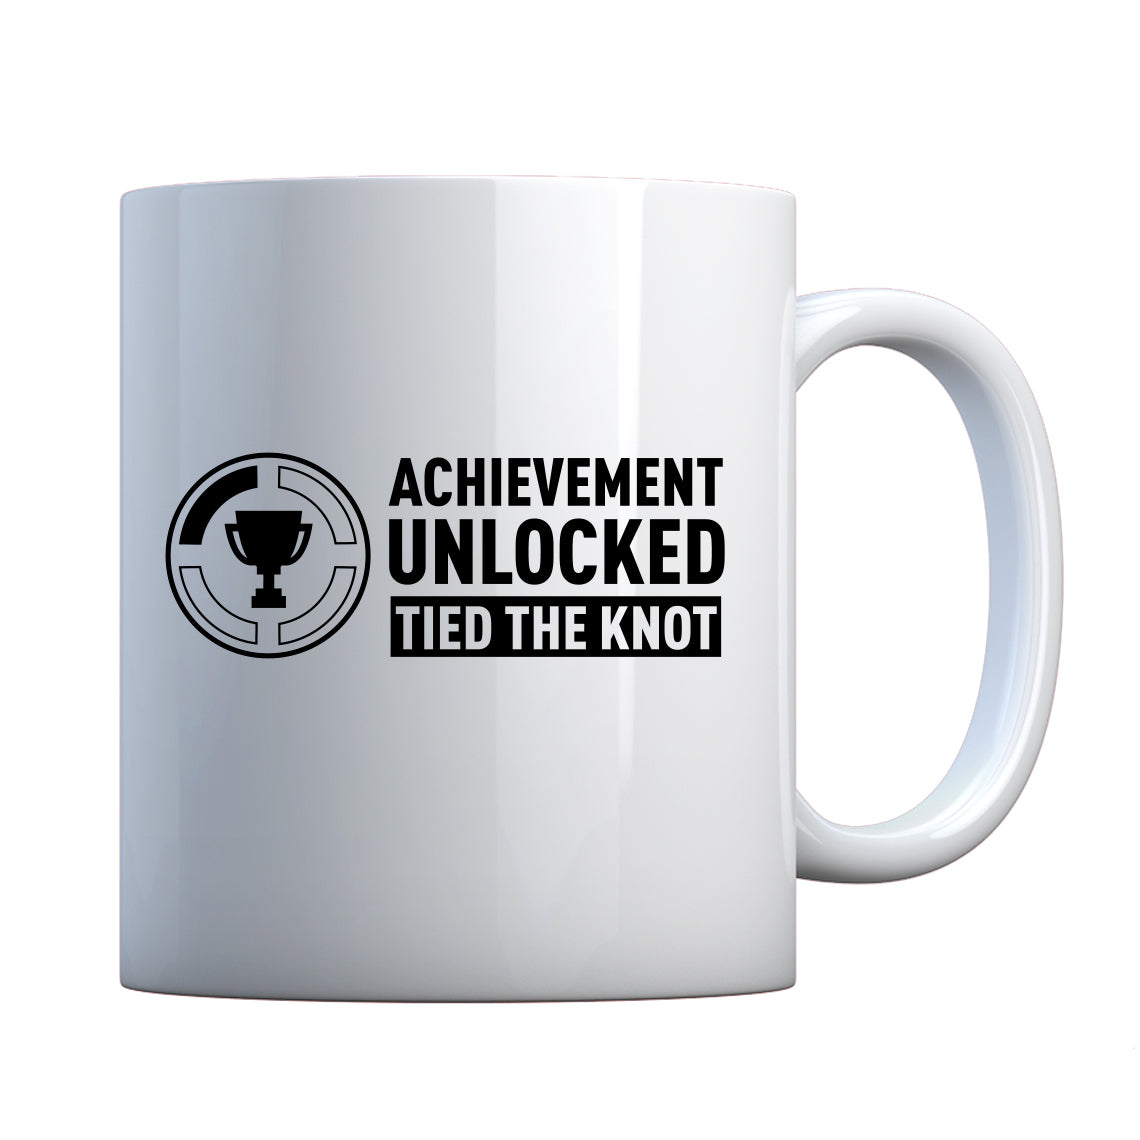 Achievement Unlocked Tied the Knot Ceramic Gift Mug